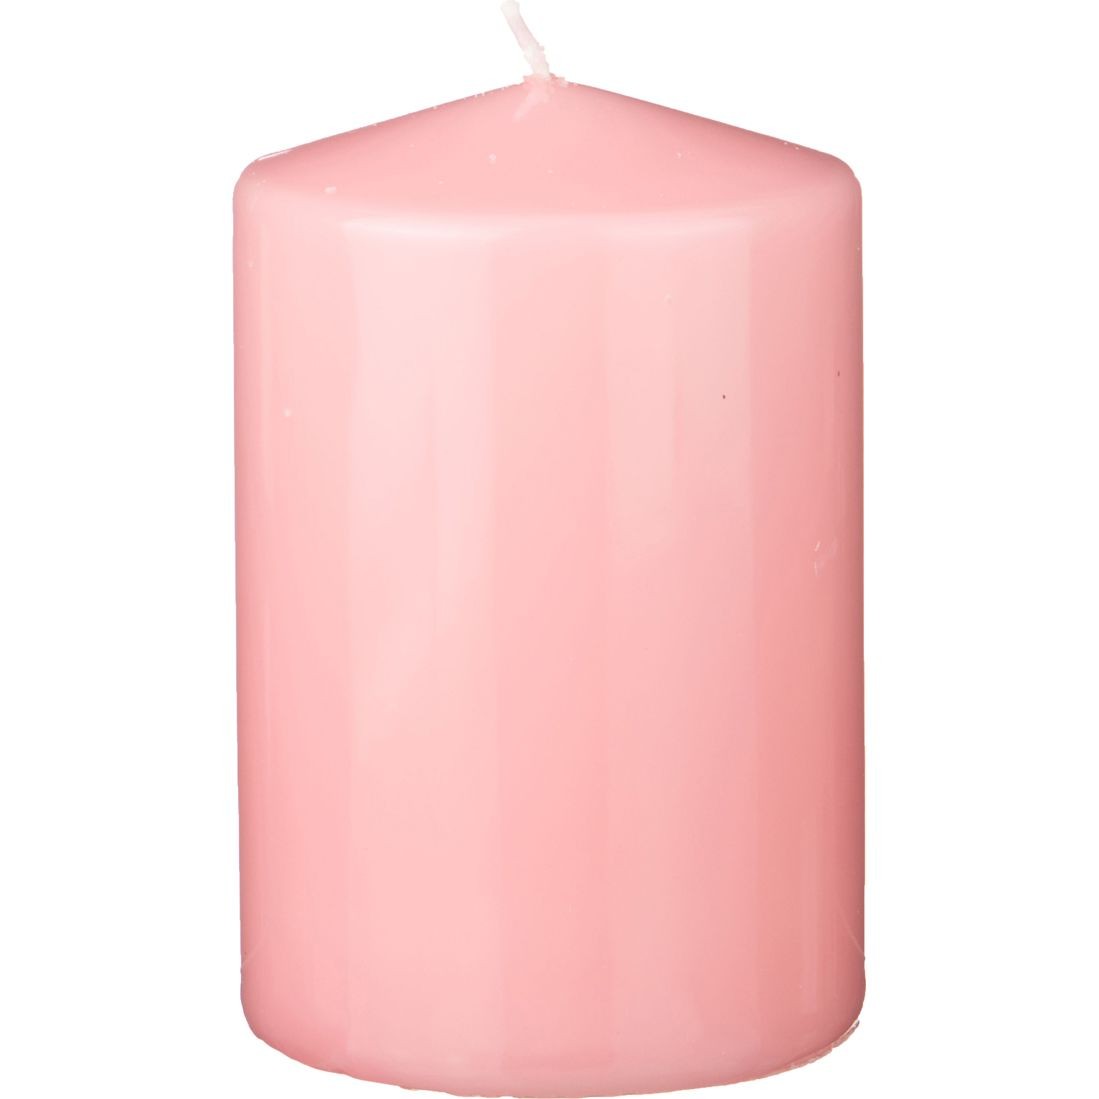 Свеча 20 см диаметр. Свеча розовая. Свеча декоративная розовая. Свечи 10 см высота. Свеча диаметр 10 см.